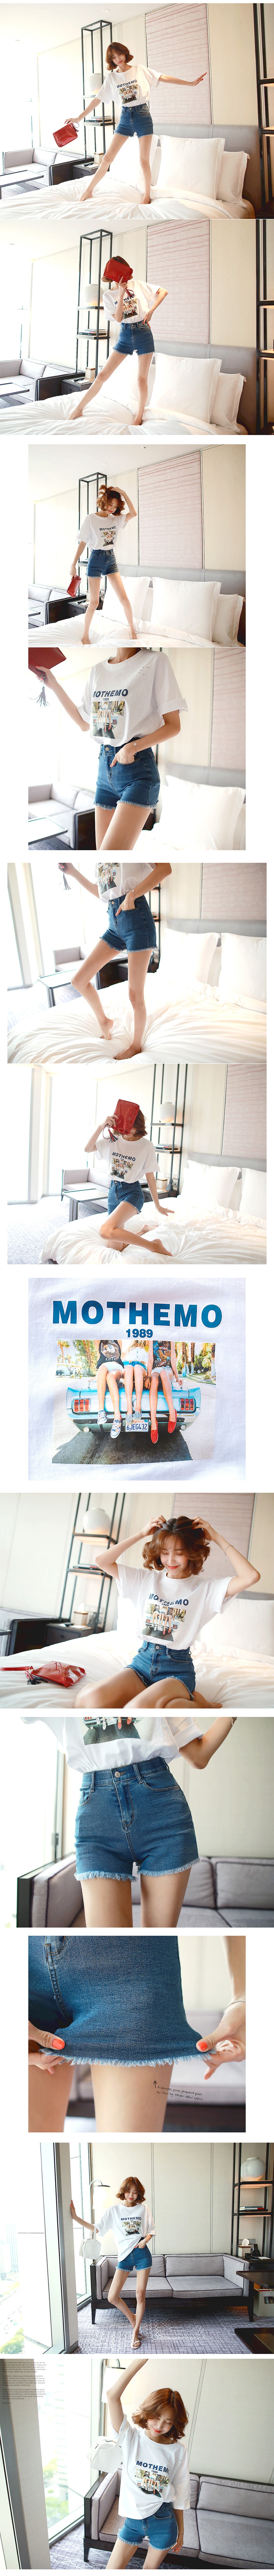 KOREA High-Rise Cut-Off Denim Shorts #Blue M(25-26) [Free Shipping]